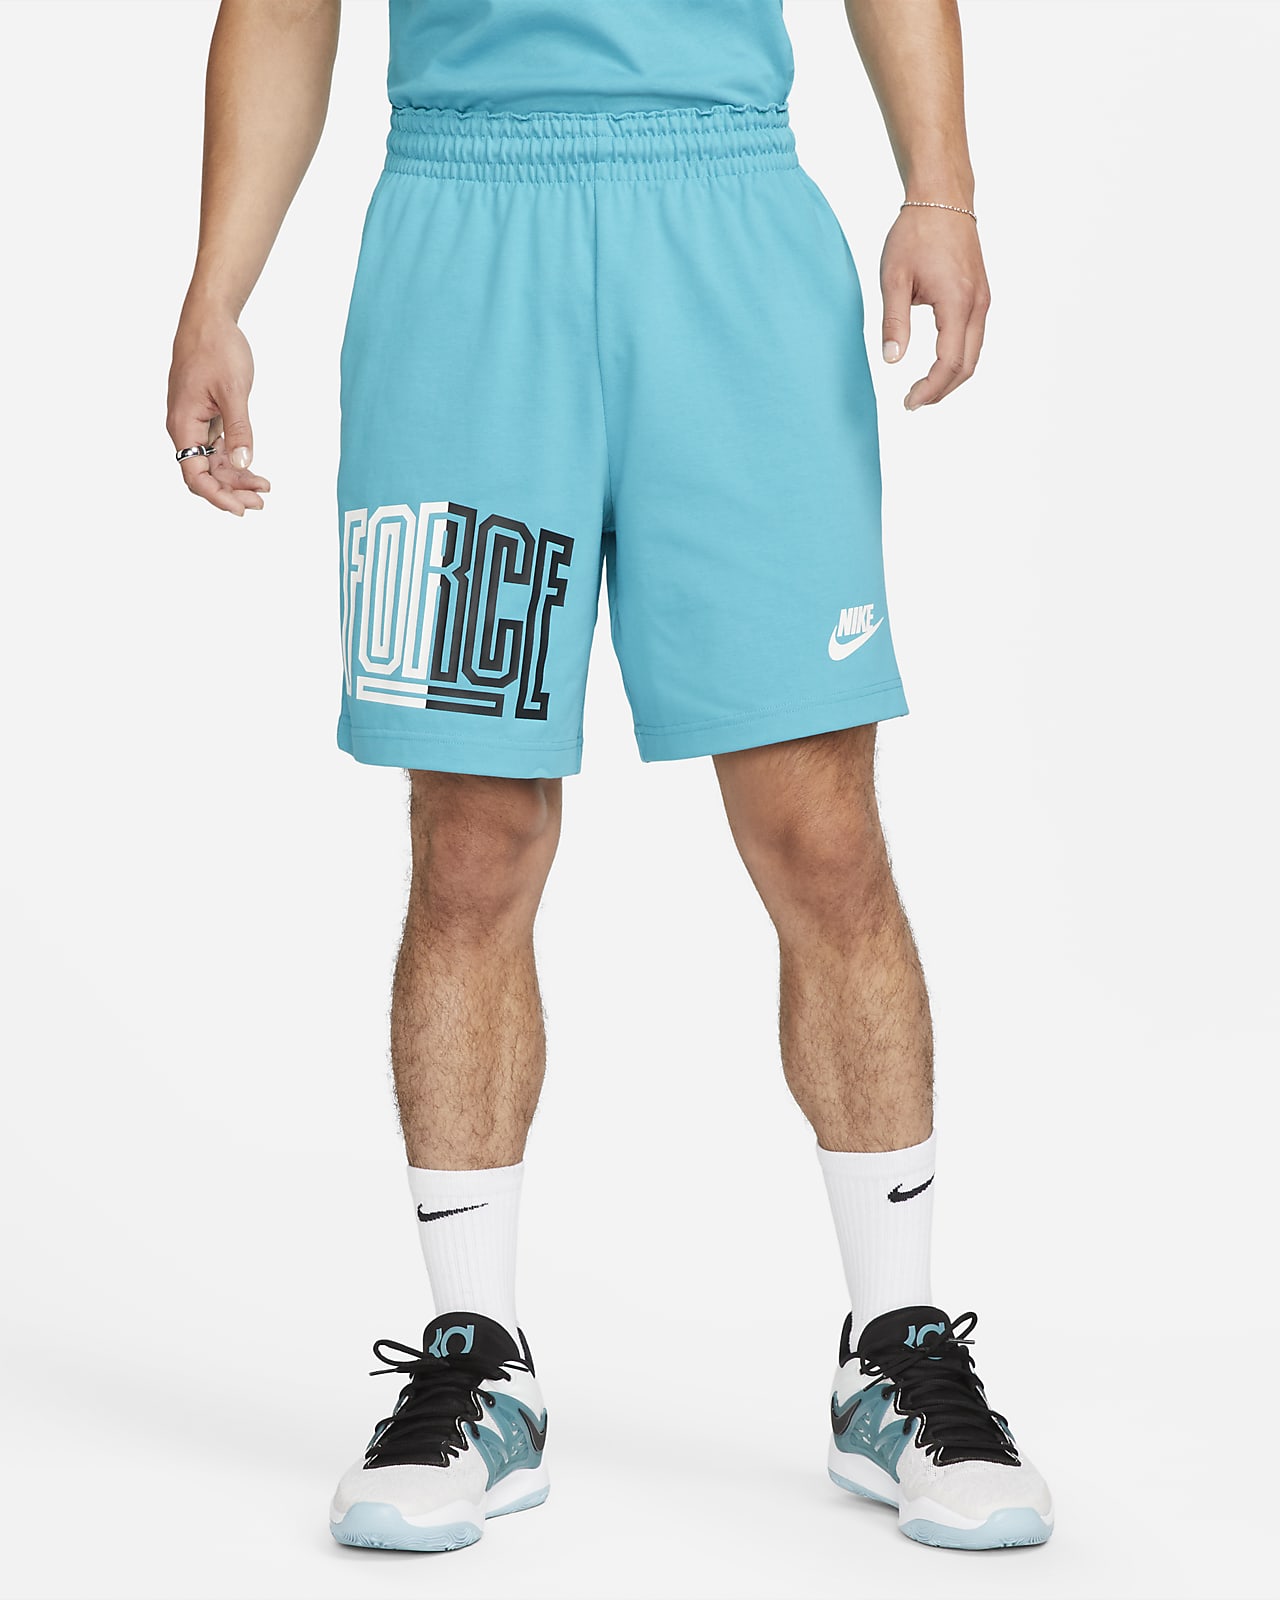 Nike Women's 8(20cm approx.) Basketball Shorts